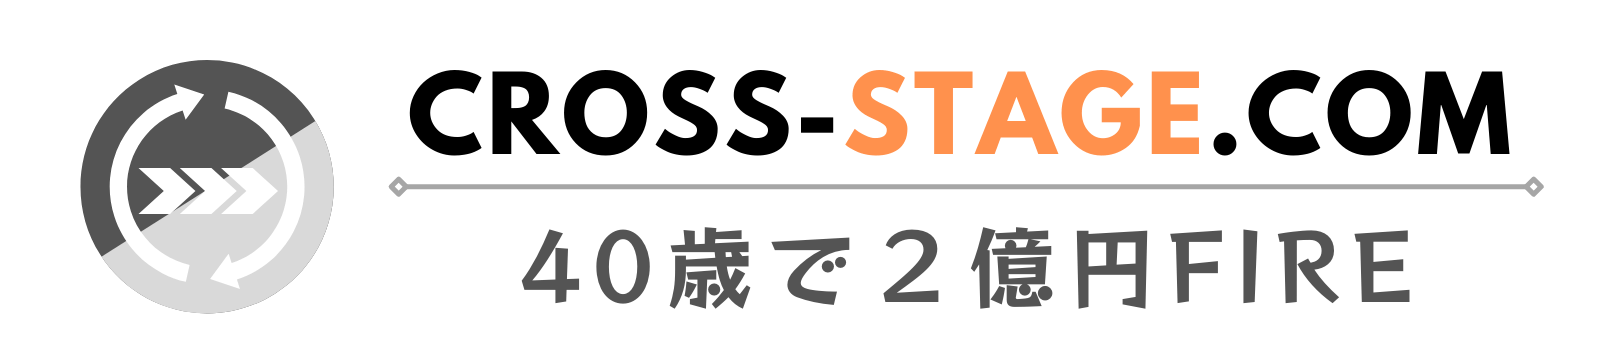 CROSS-STAGE.COM